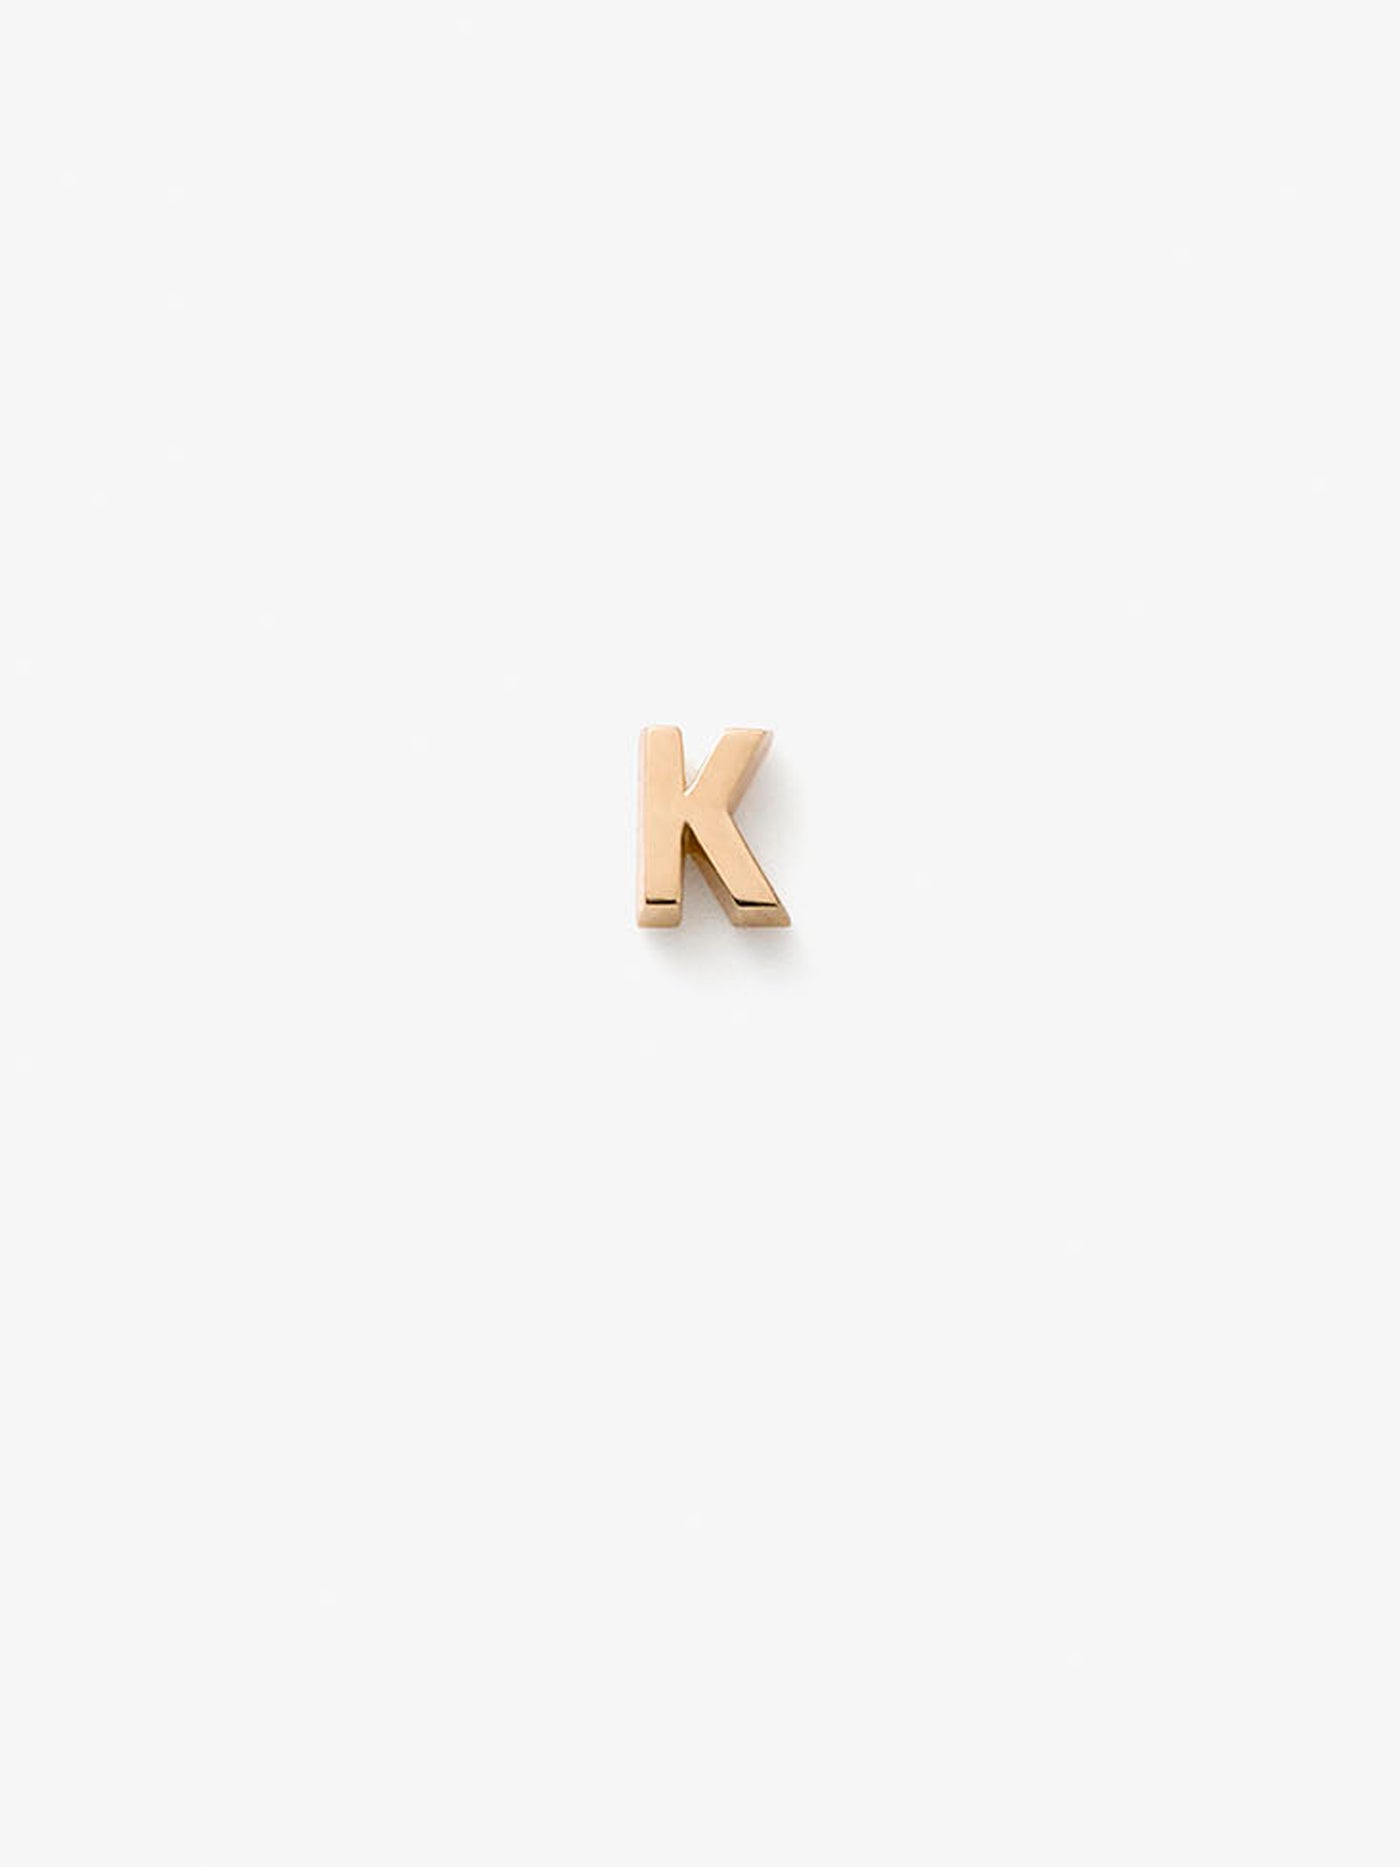 18-Karat Gold Letter K